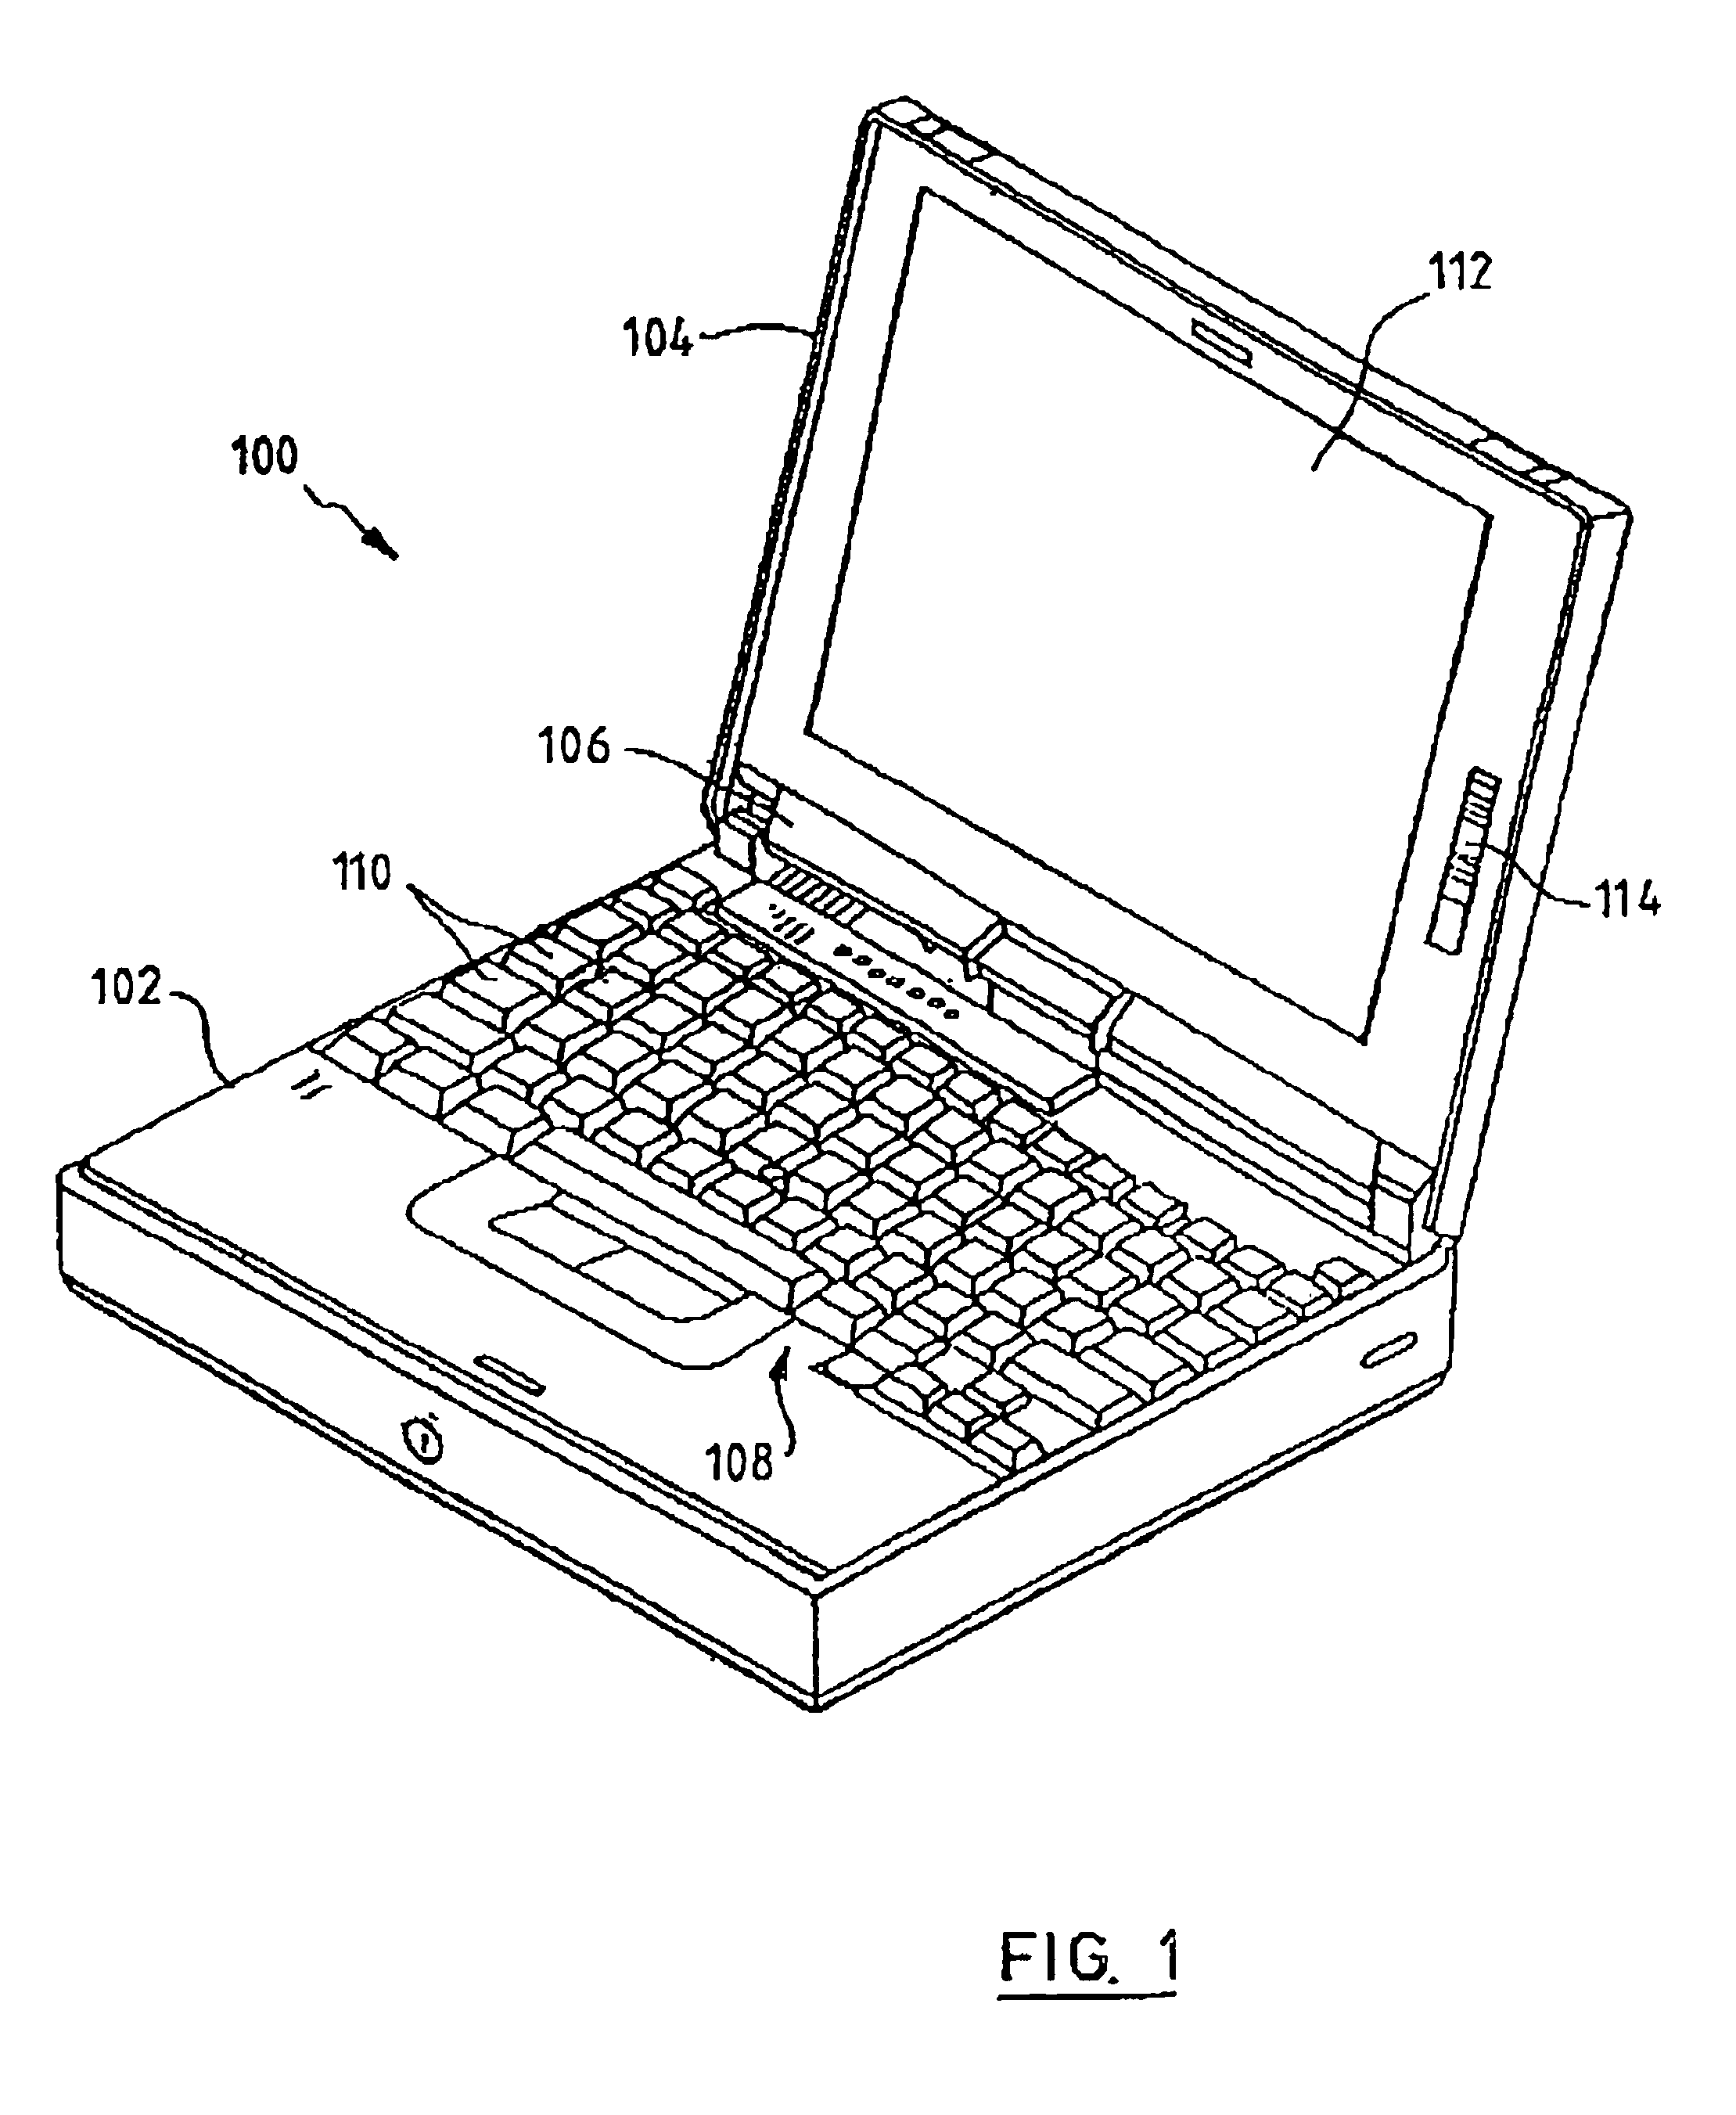 Keyboard illumination for computing devices having backlit displays